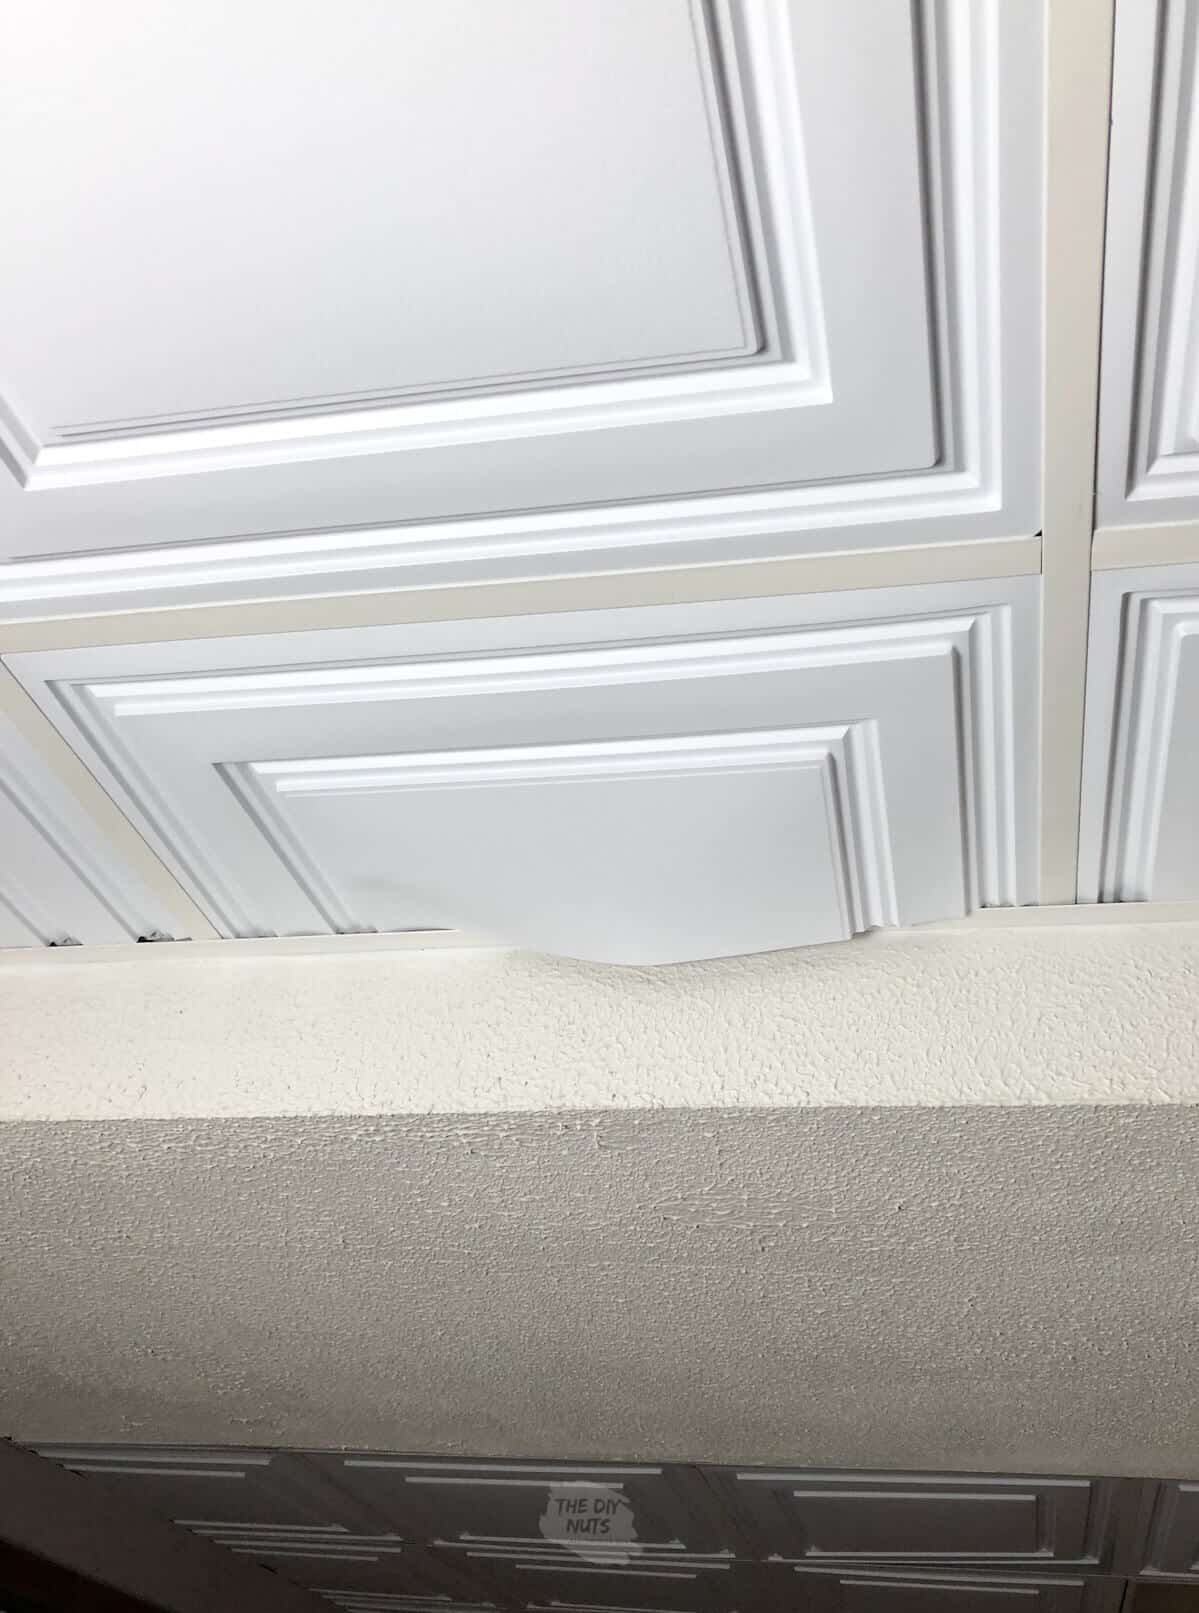 vinyl drop ceiling tile sagging after being cut wrong